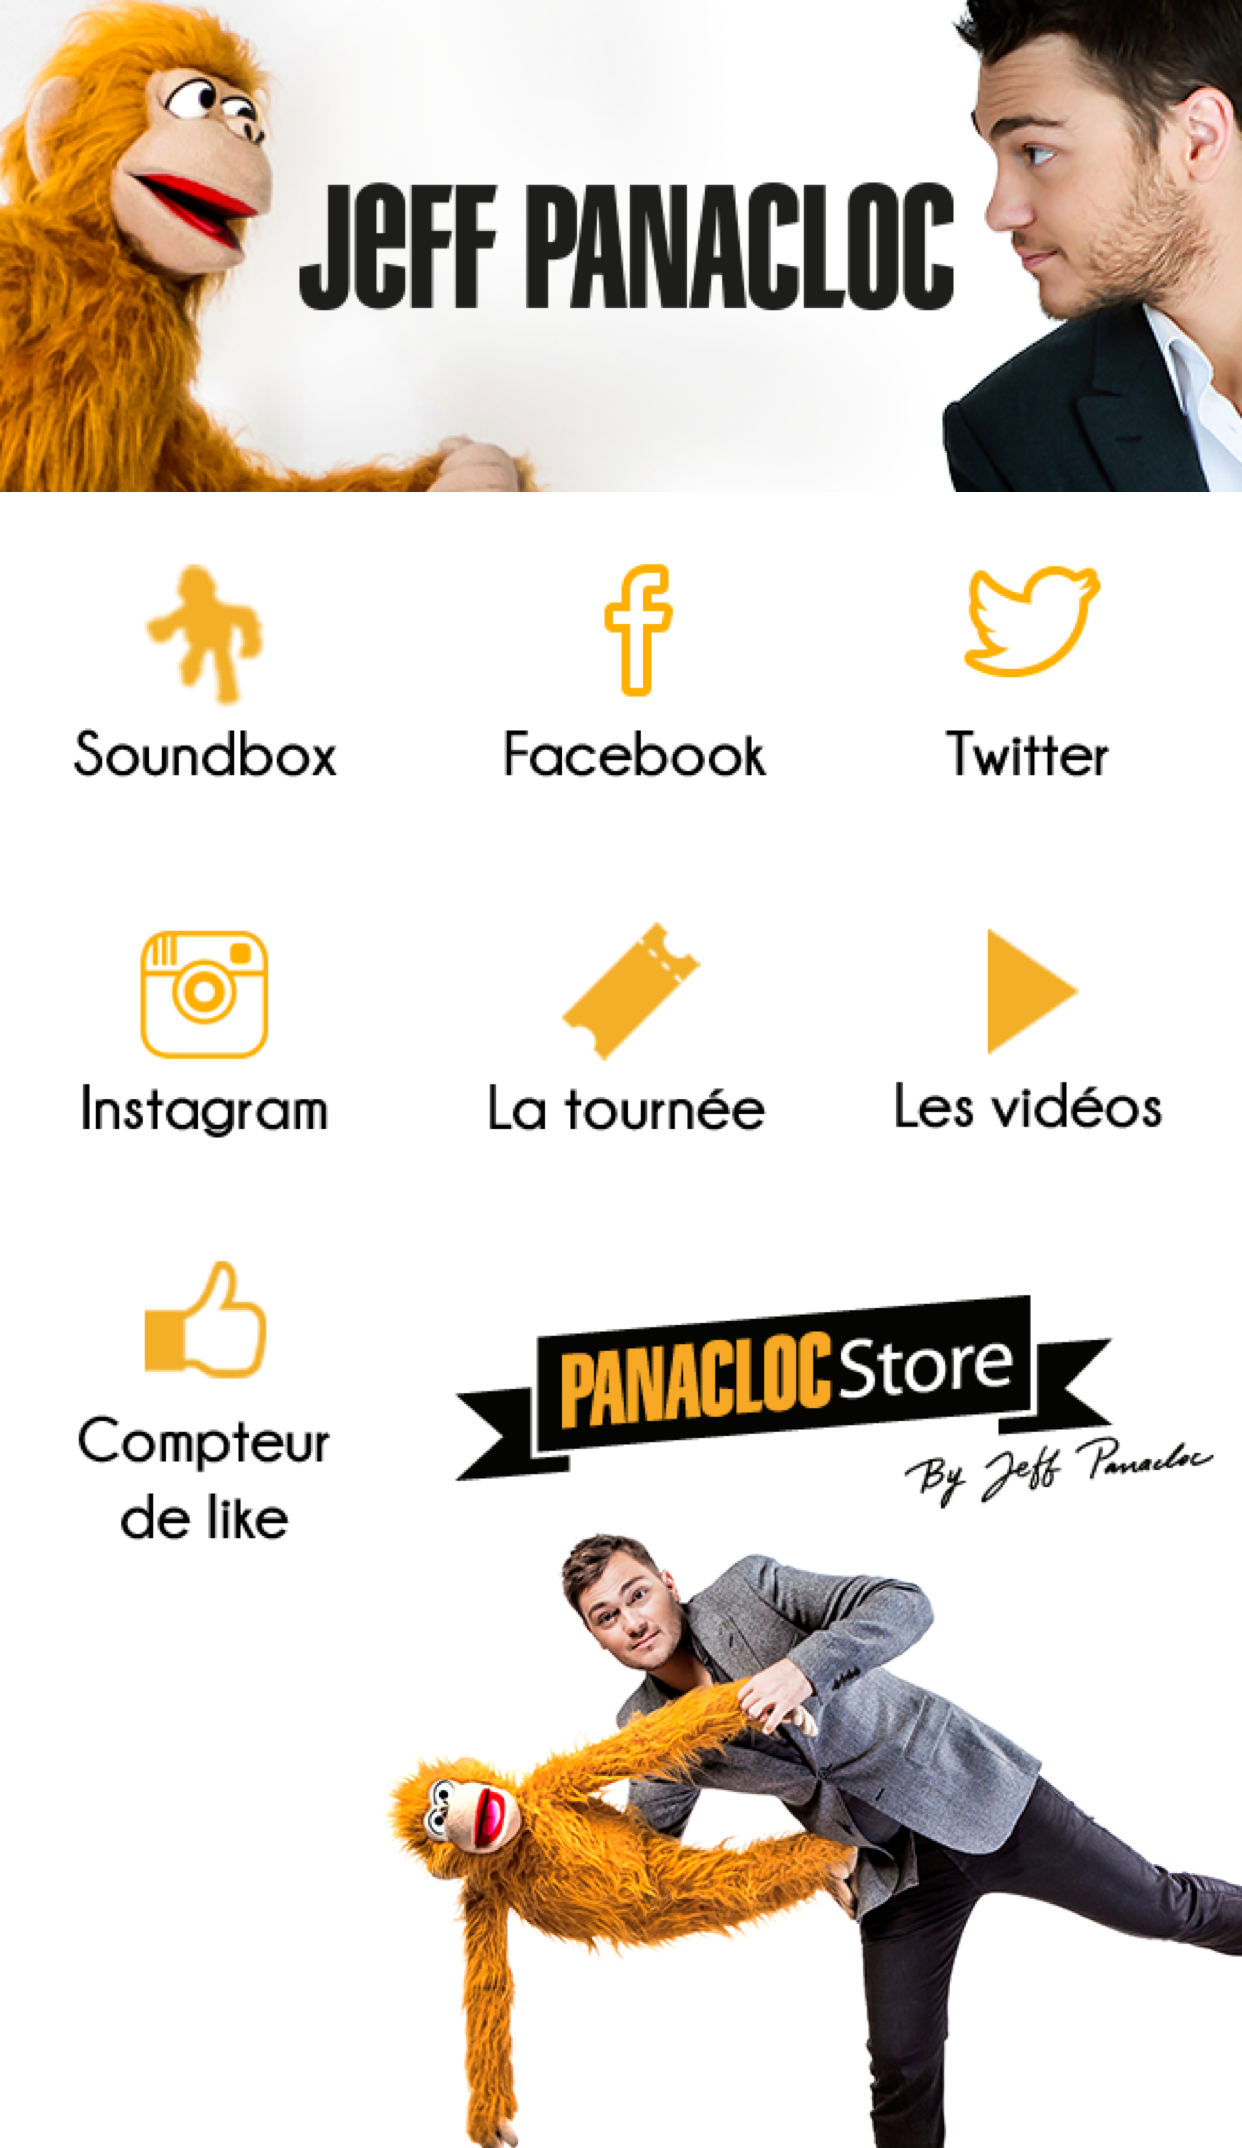 Android application Jeff Panacloc et Jean-Marc screenshort